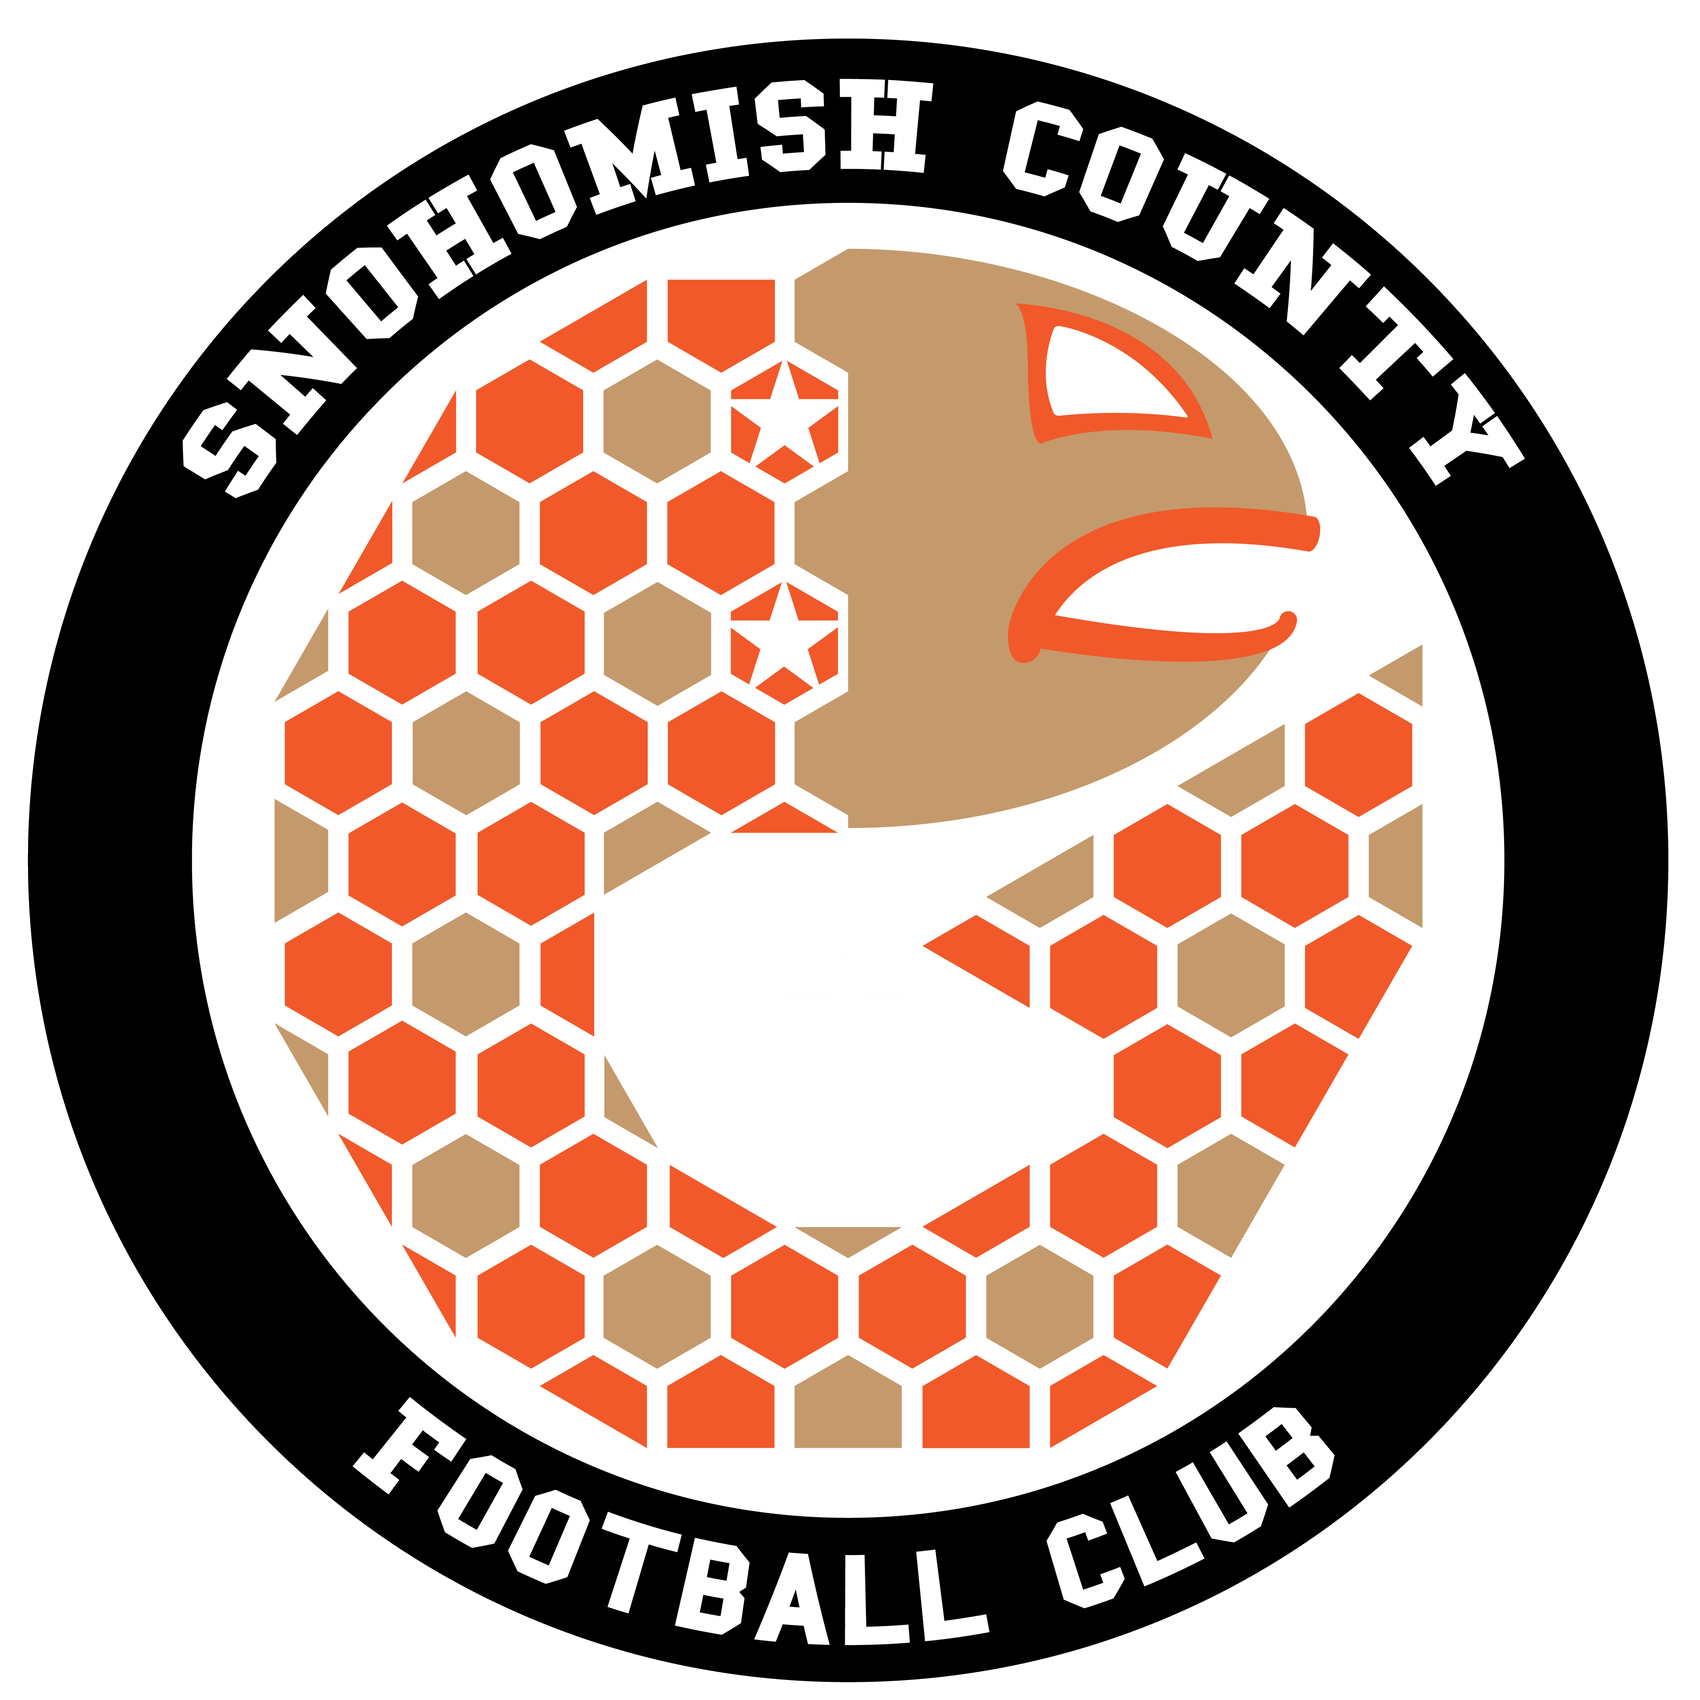 Snohomish County Football Club